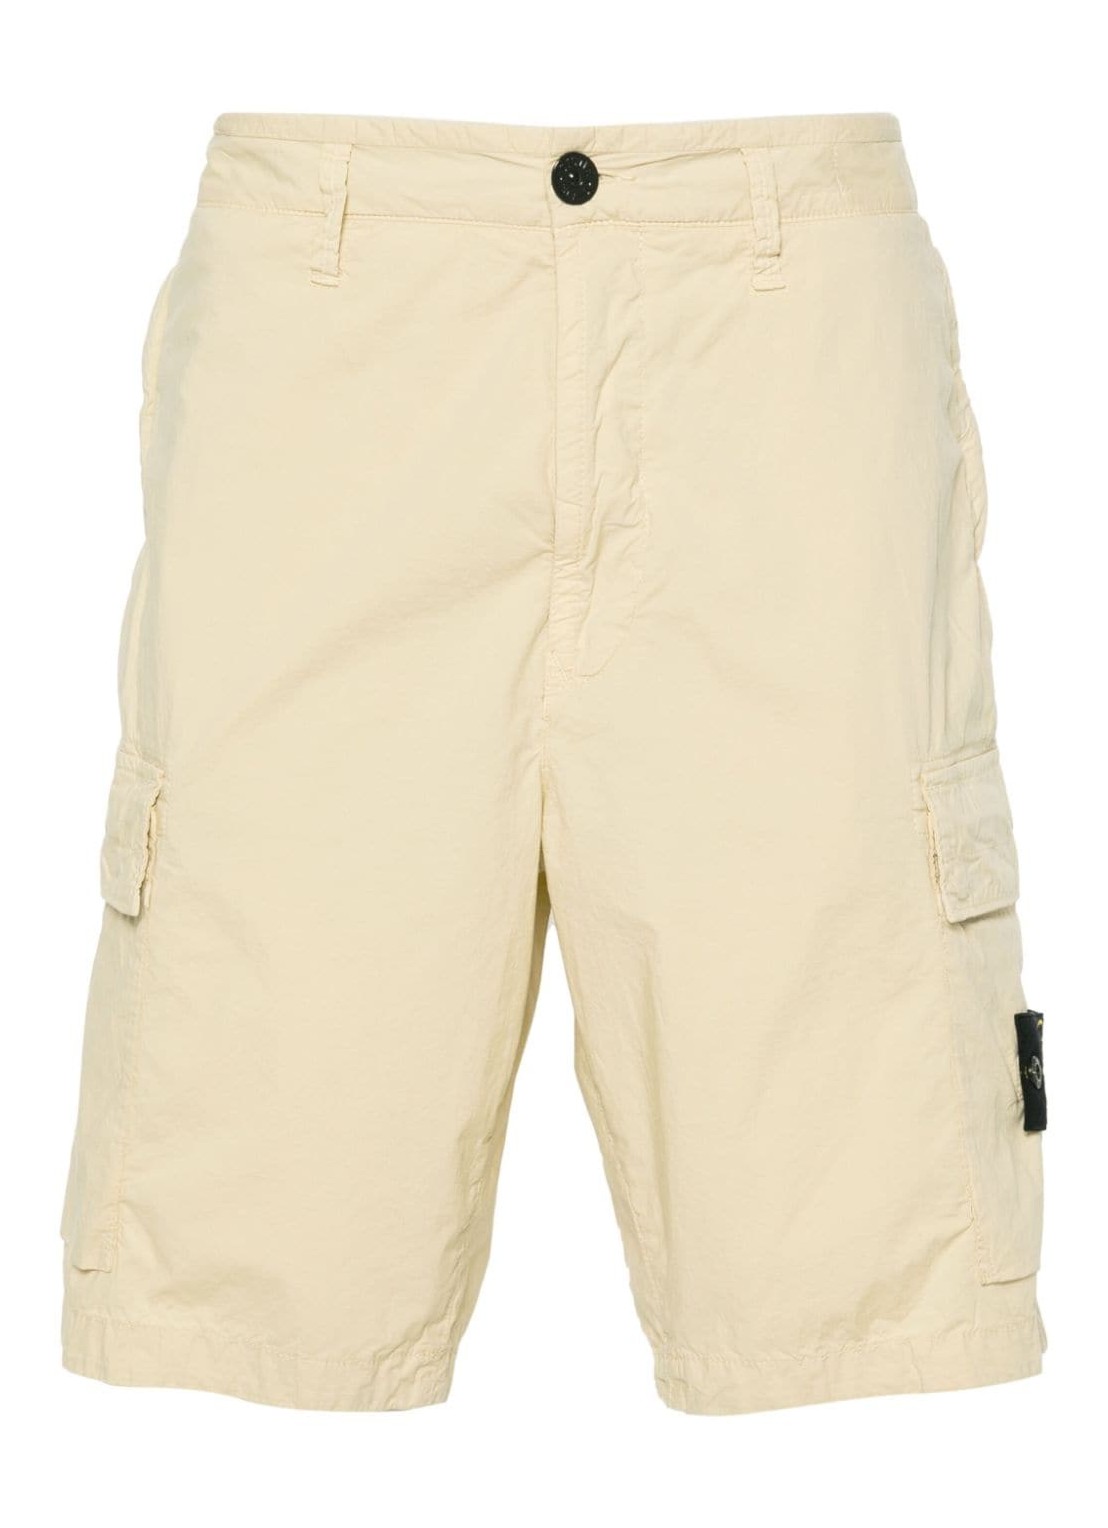 Pantalon corto stone island short pant man bermuda shorts 8015l0803 v0091 talla beige
 